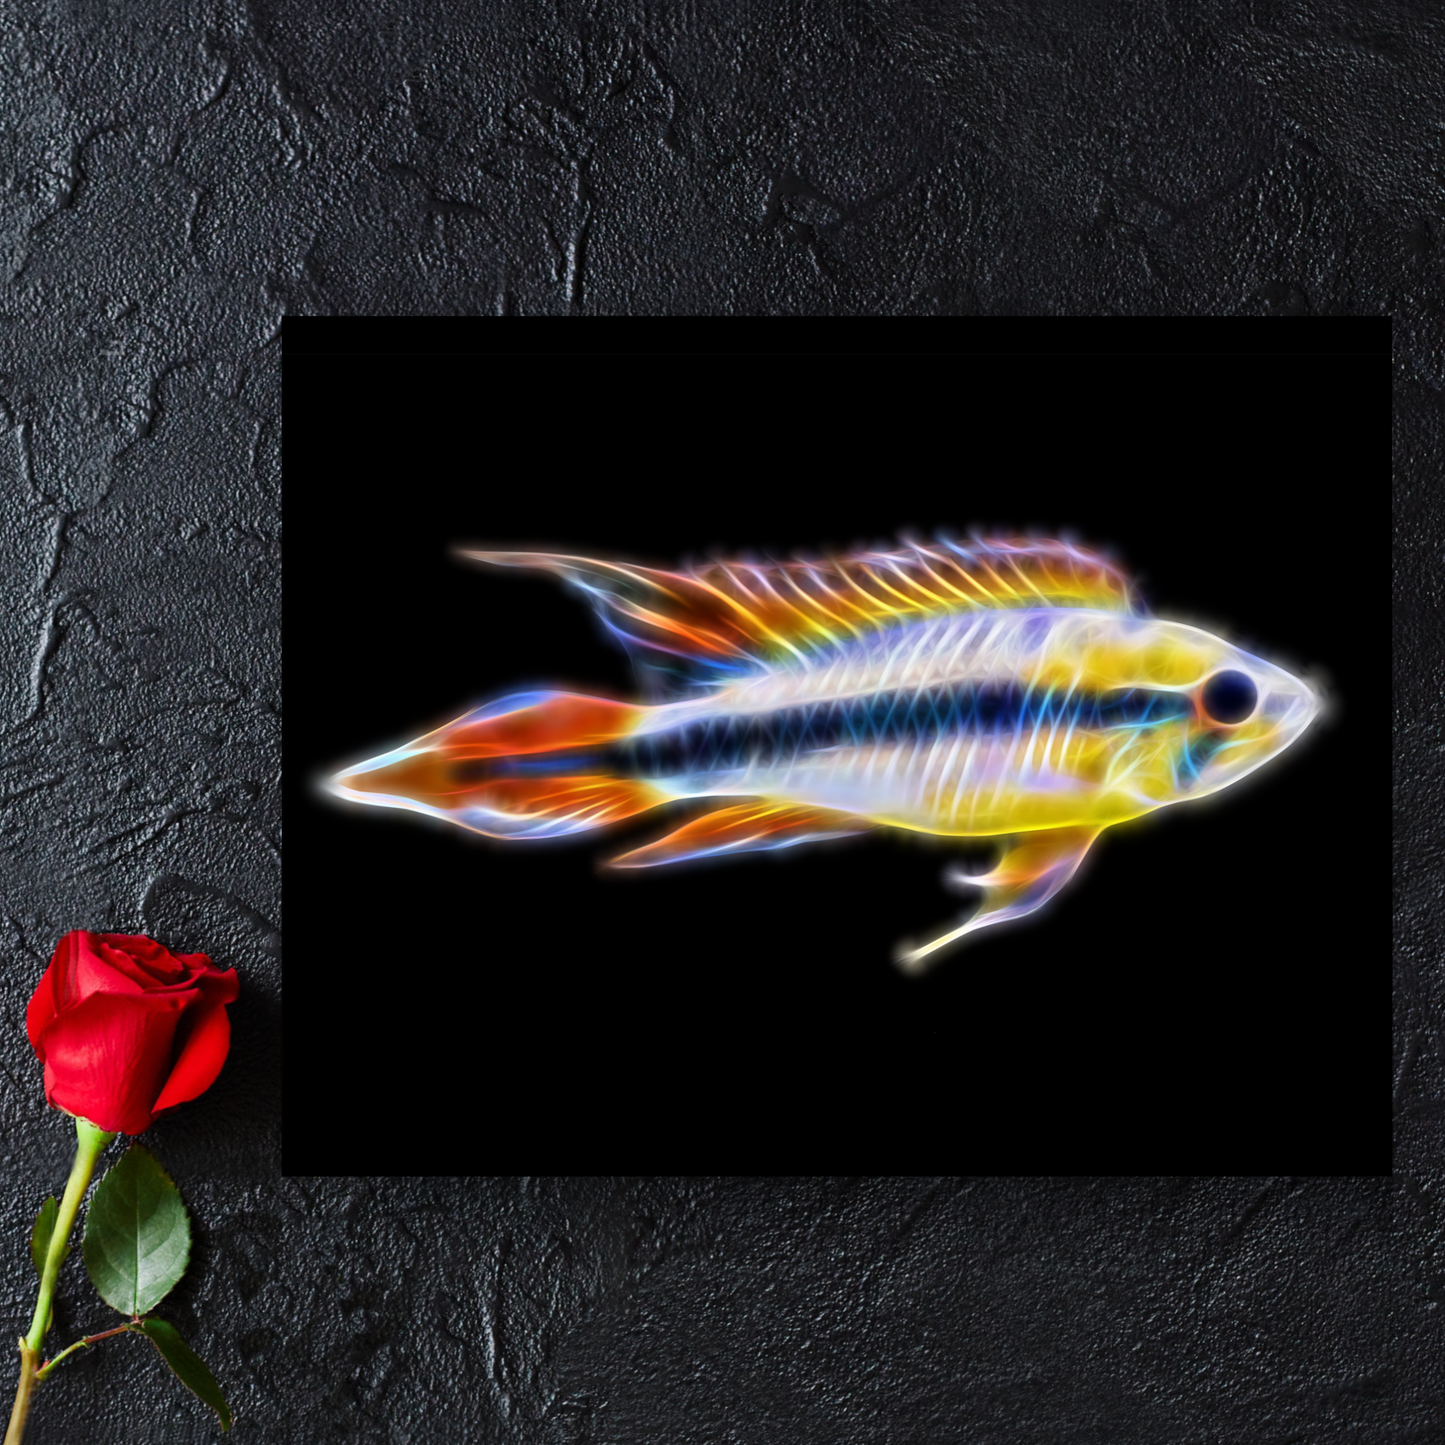 Double Red Dwarf Apistogramma Cichlid Fish Metal Wall Plaque.